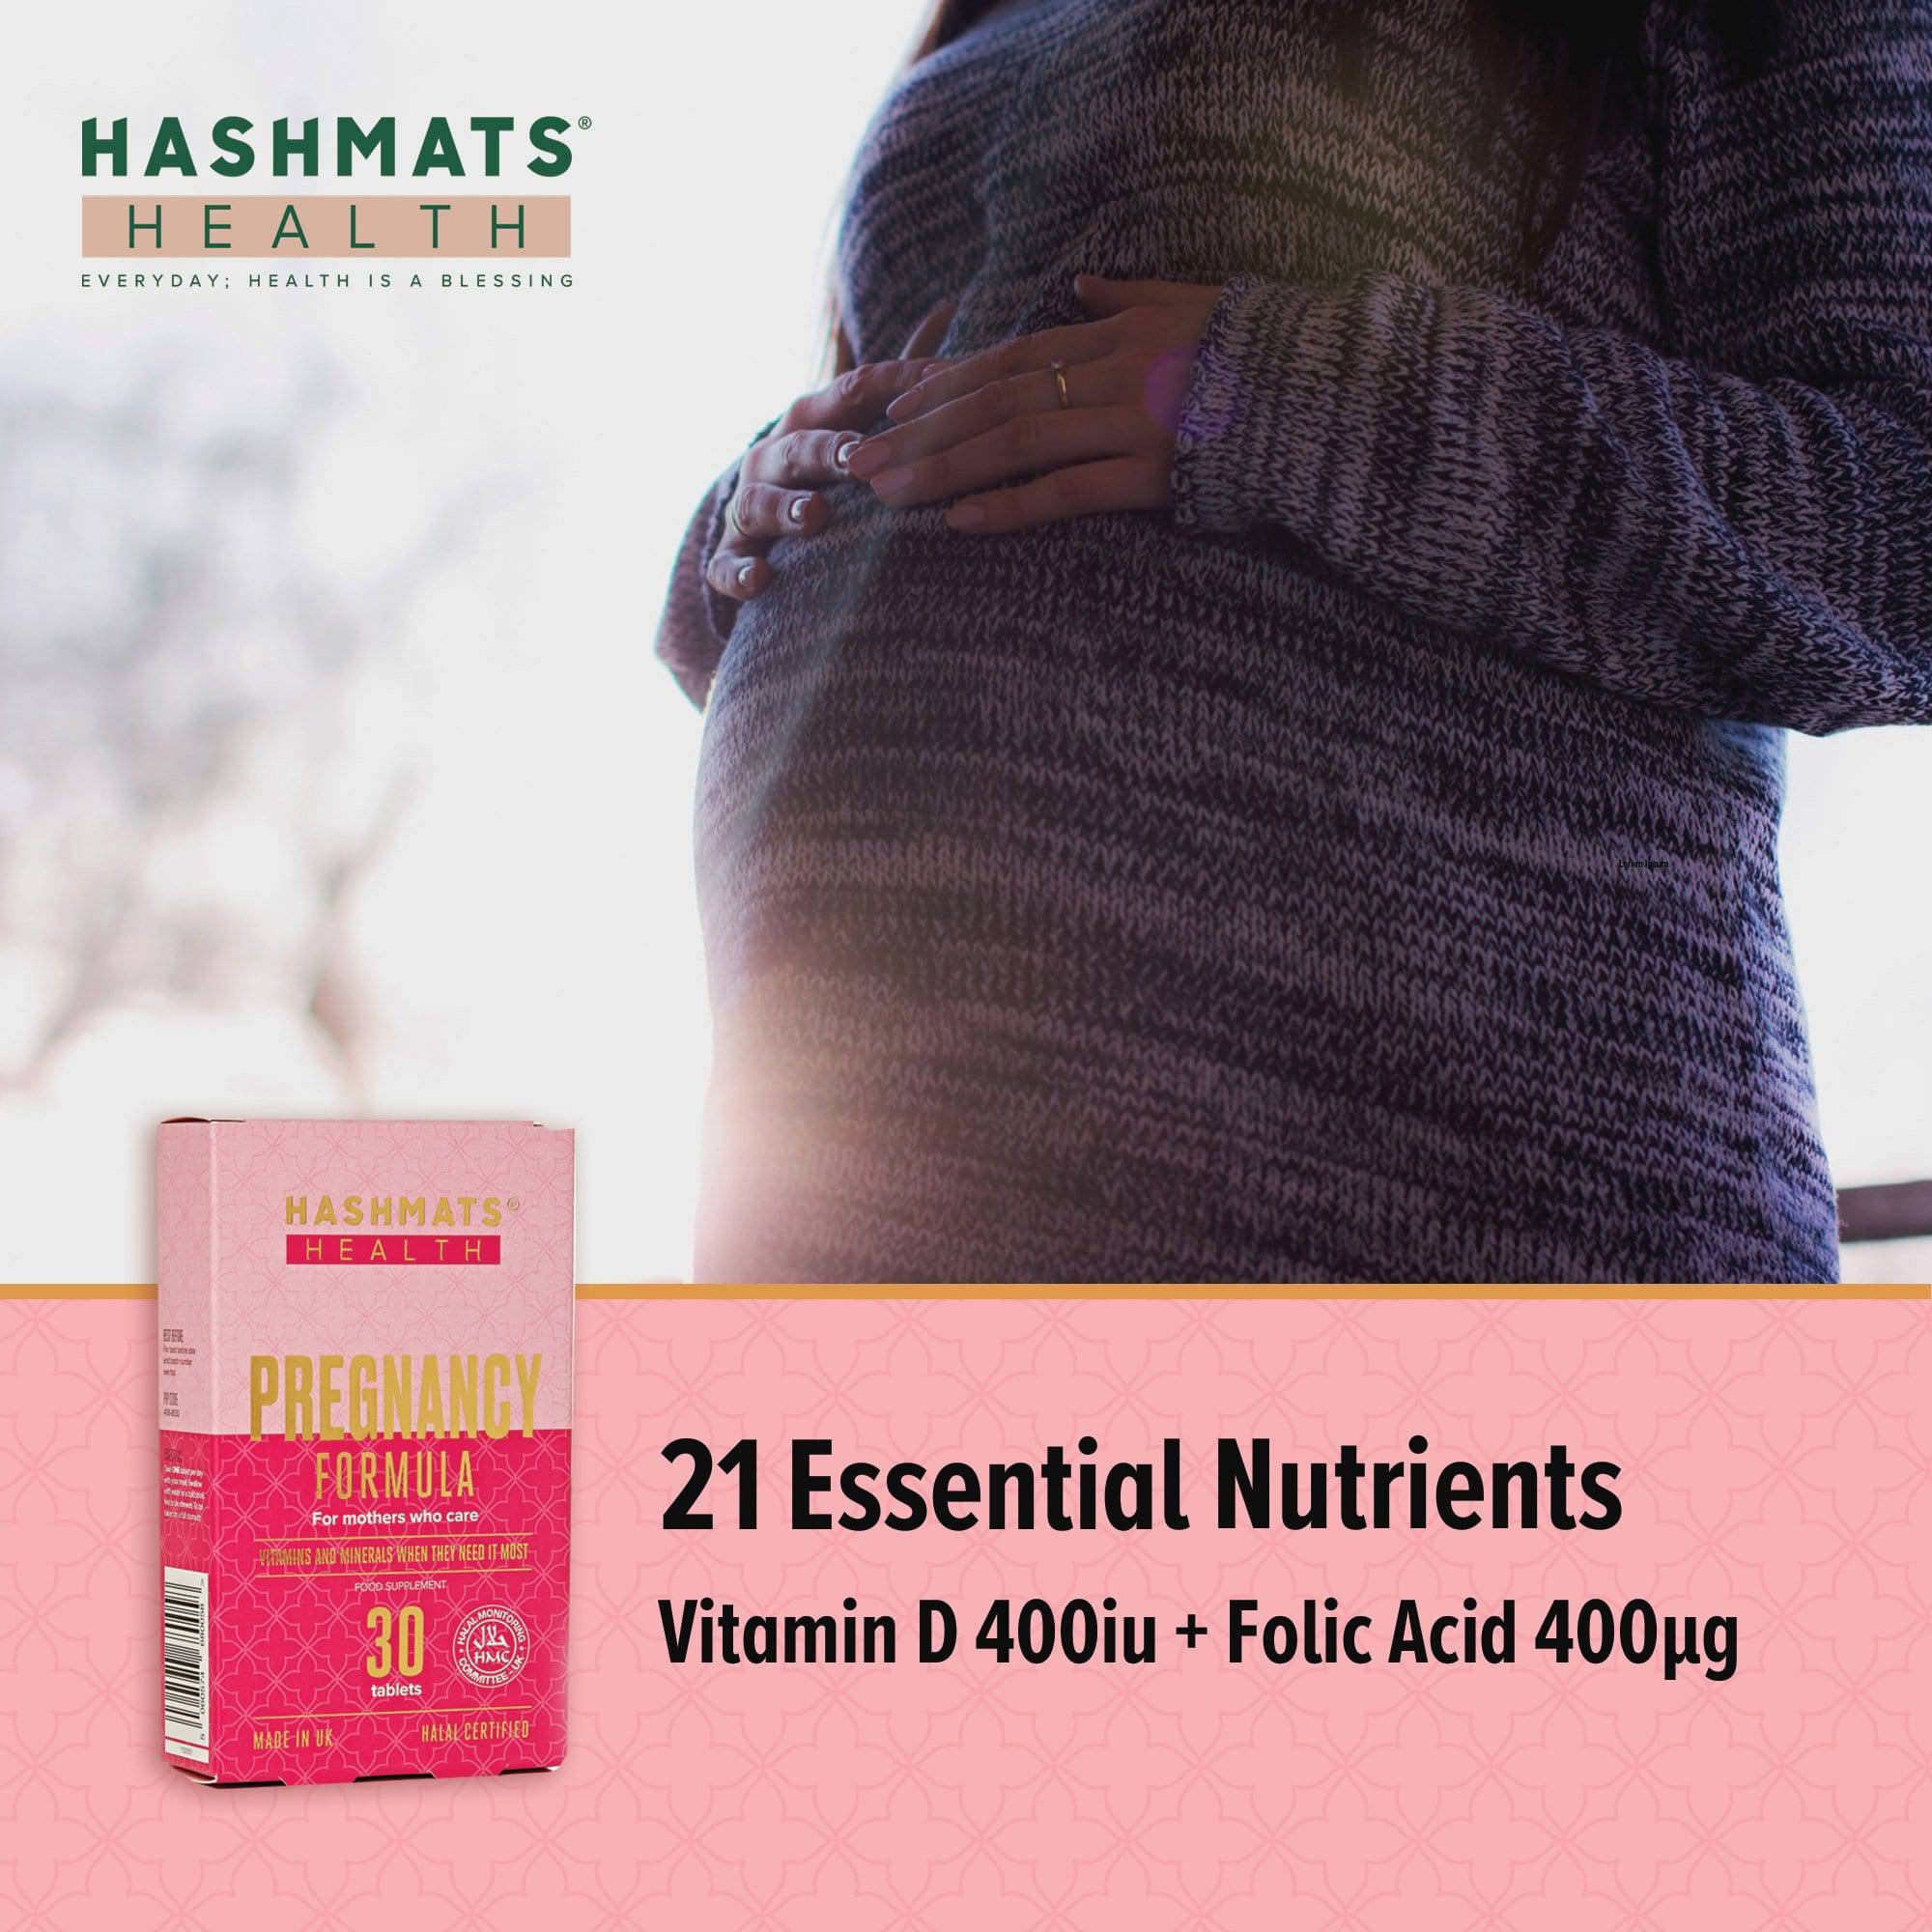 halal vitamins HabibaaCare® Pregnancy Vitamins and Minerals - by HASHMATS® - Hashmats Health